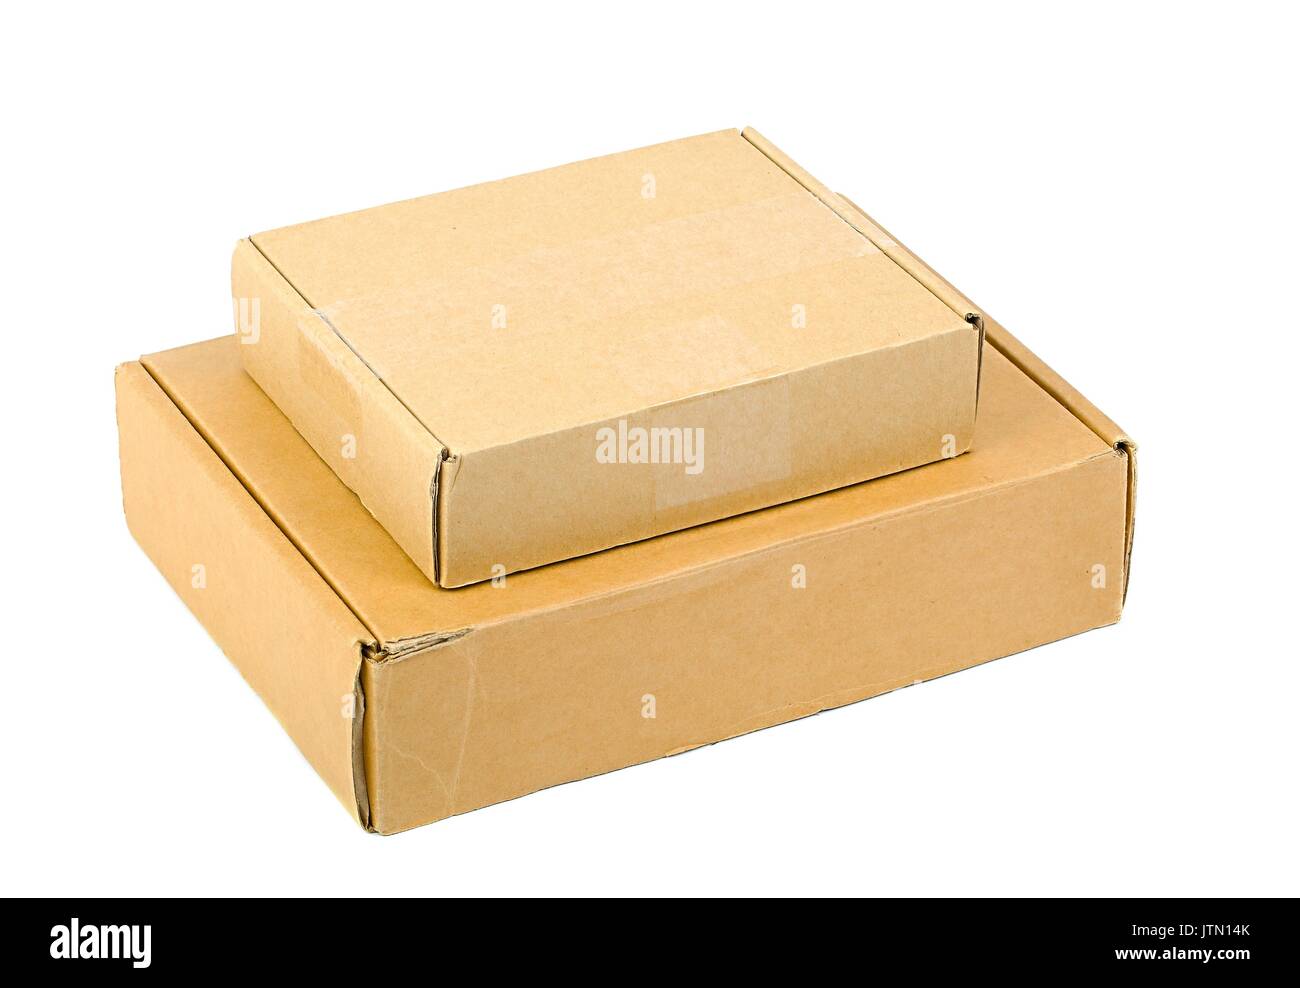 Cardboard Boxes on White Stock Photo